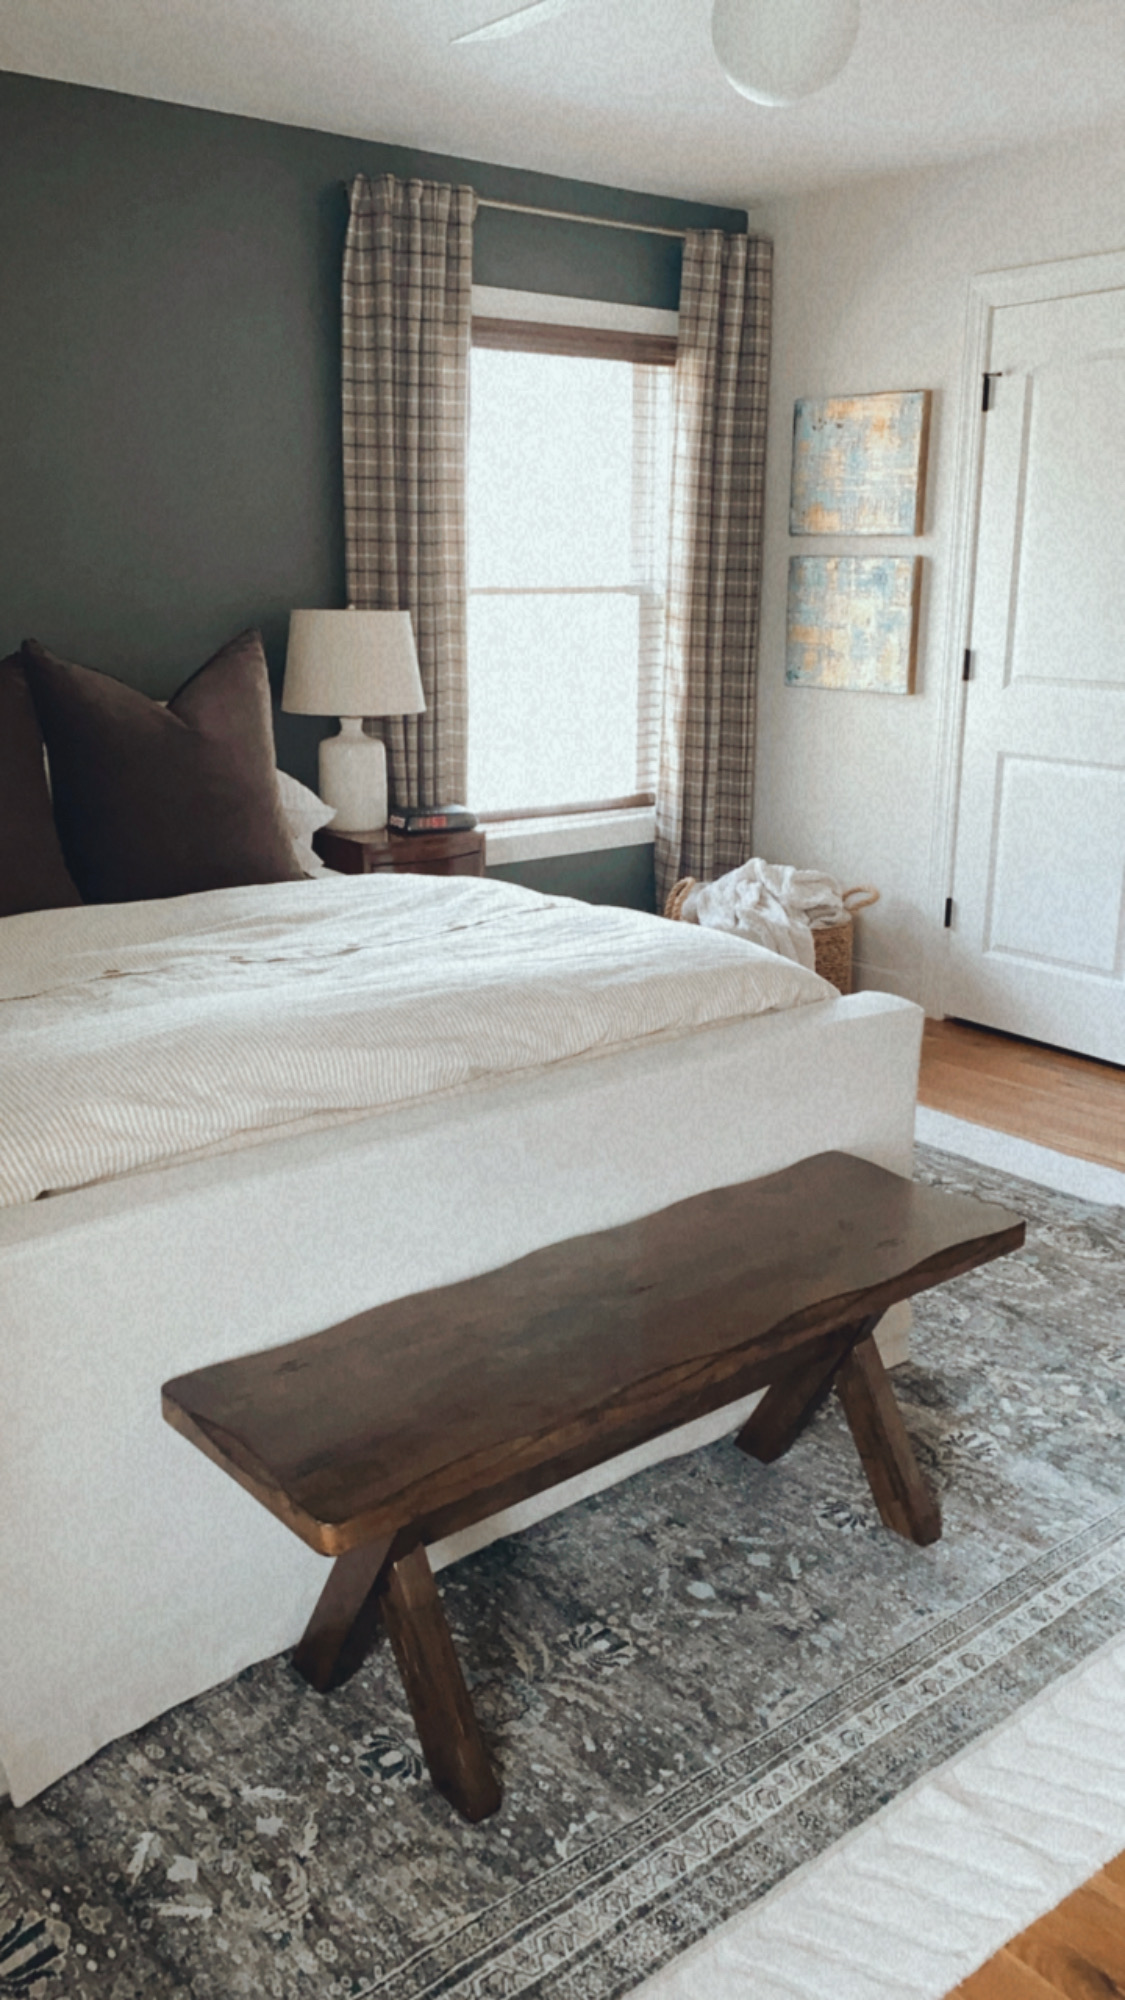 Recent Bedroom Decor Updates | Louella Reese